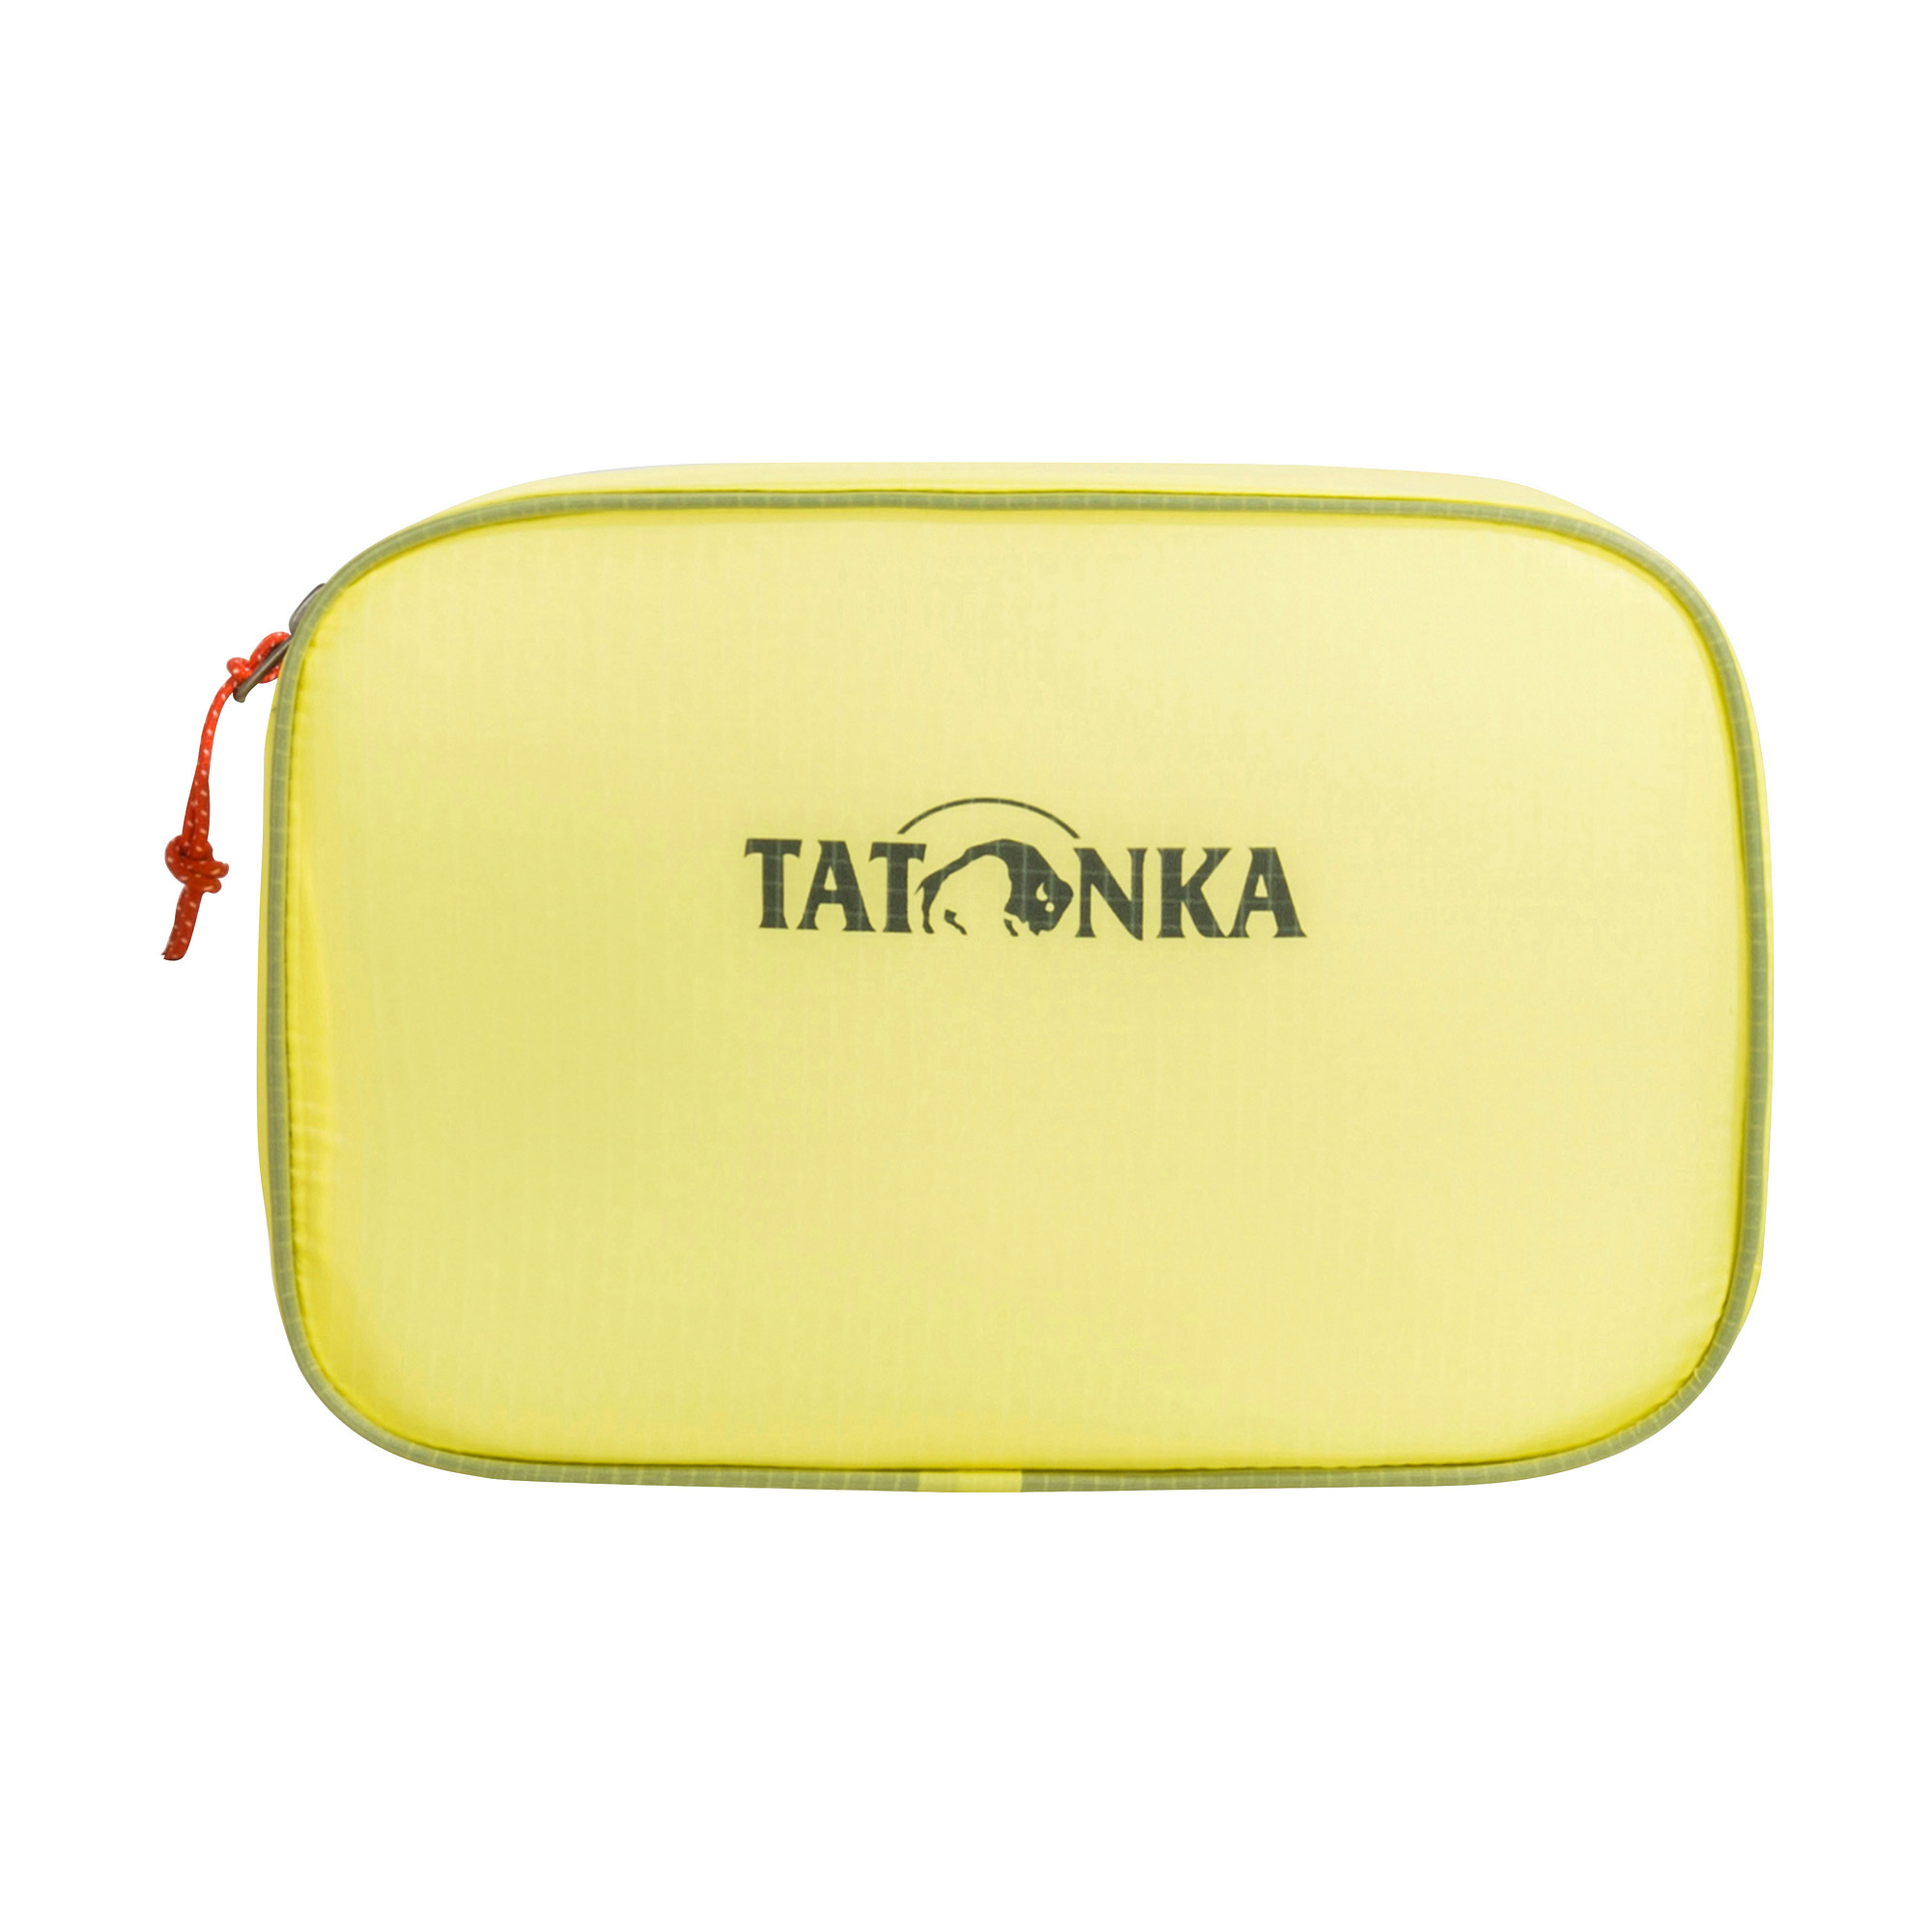 Tatonka SQZY Zip Bag 4l light yellow gelb Rucksack-Zubehör 4013236335309